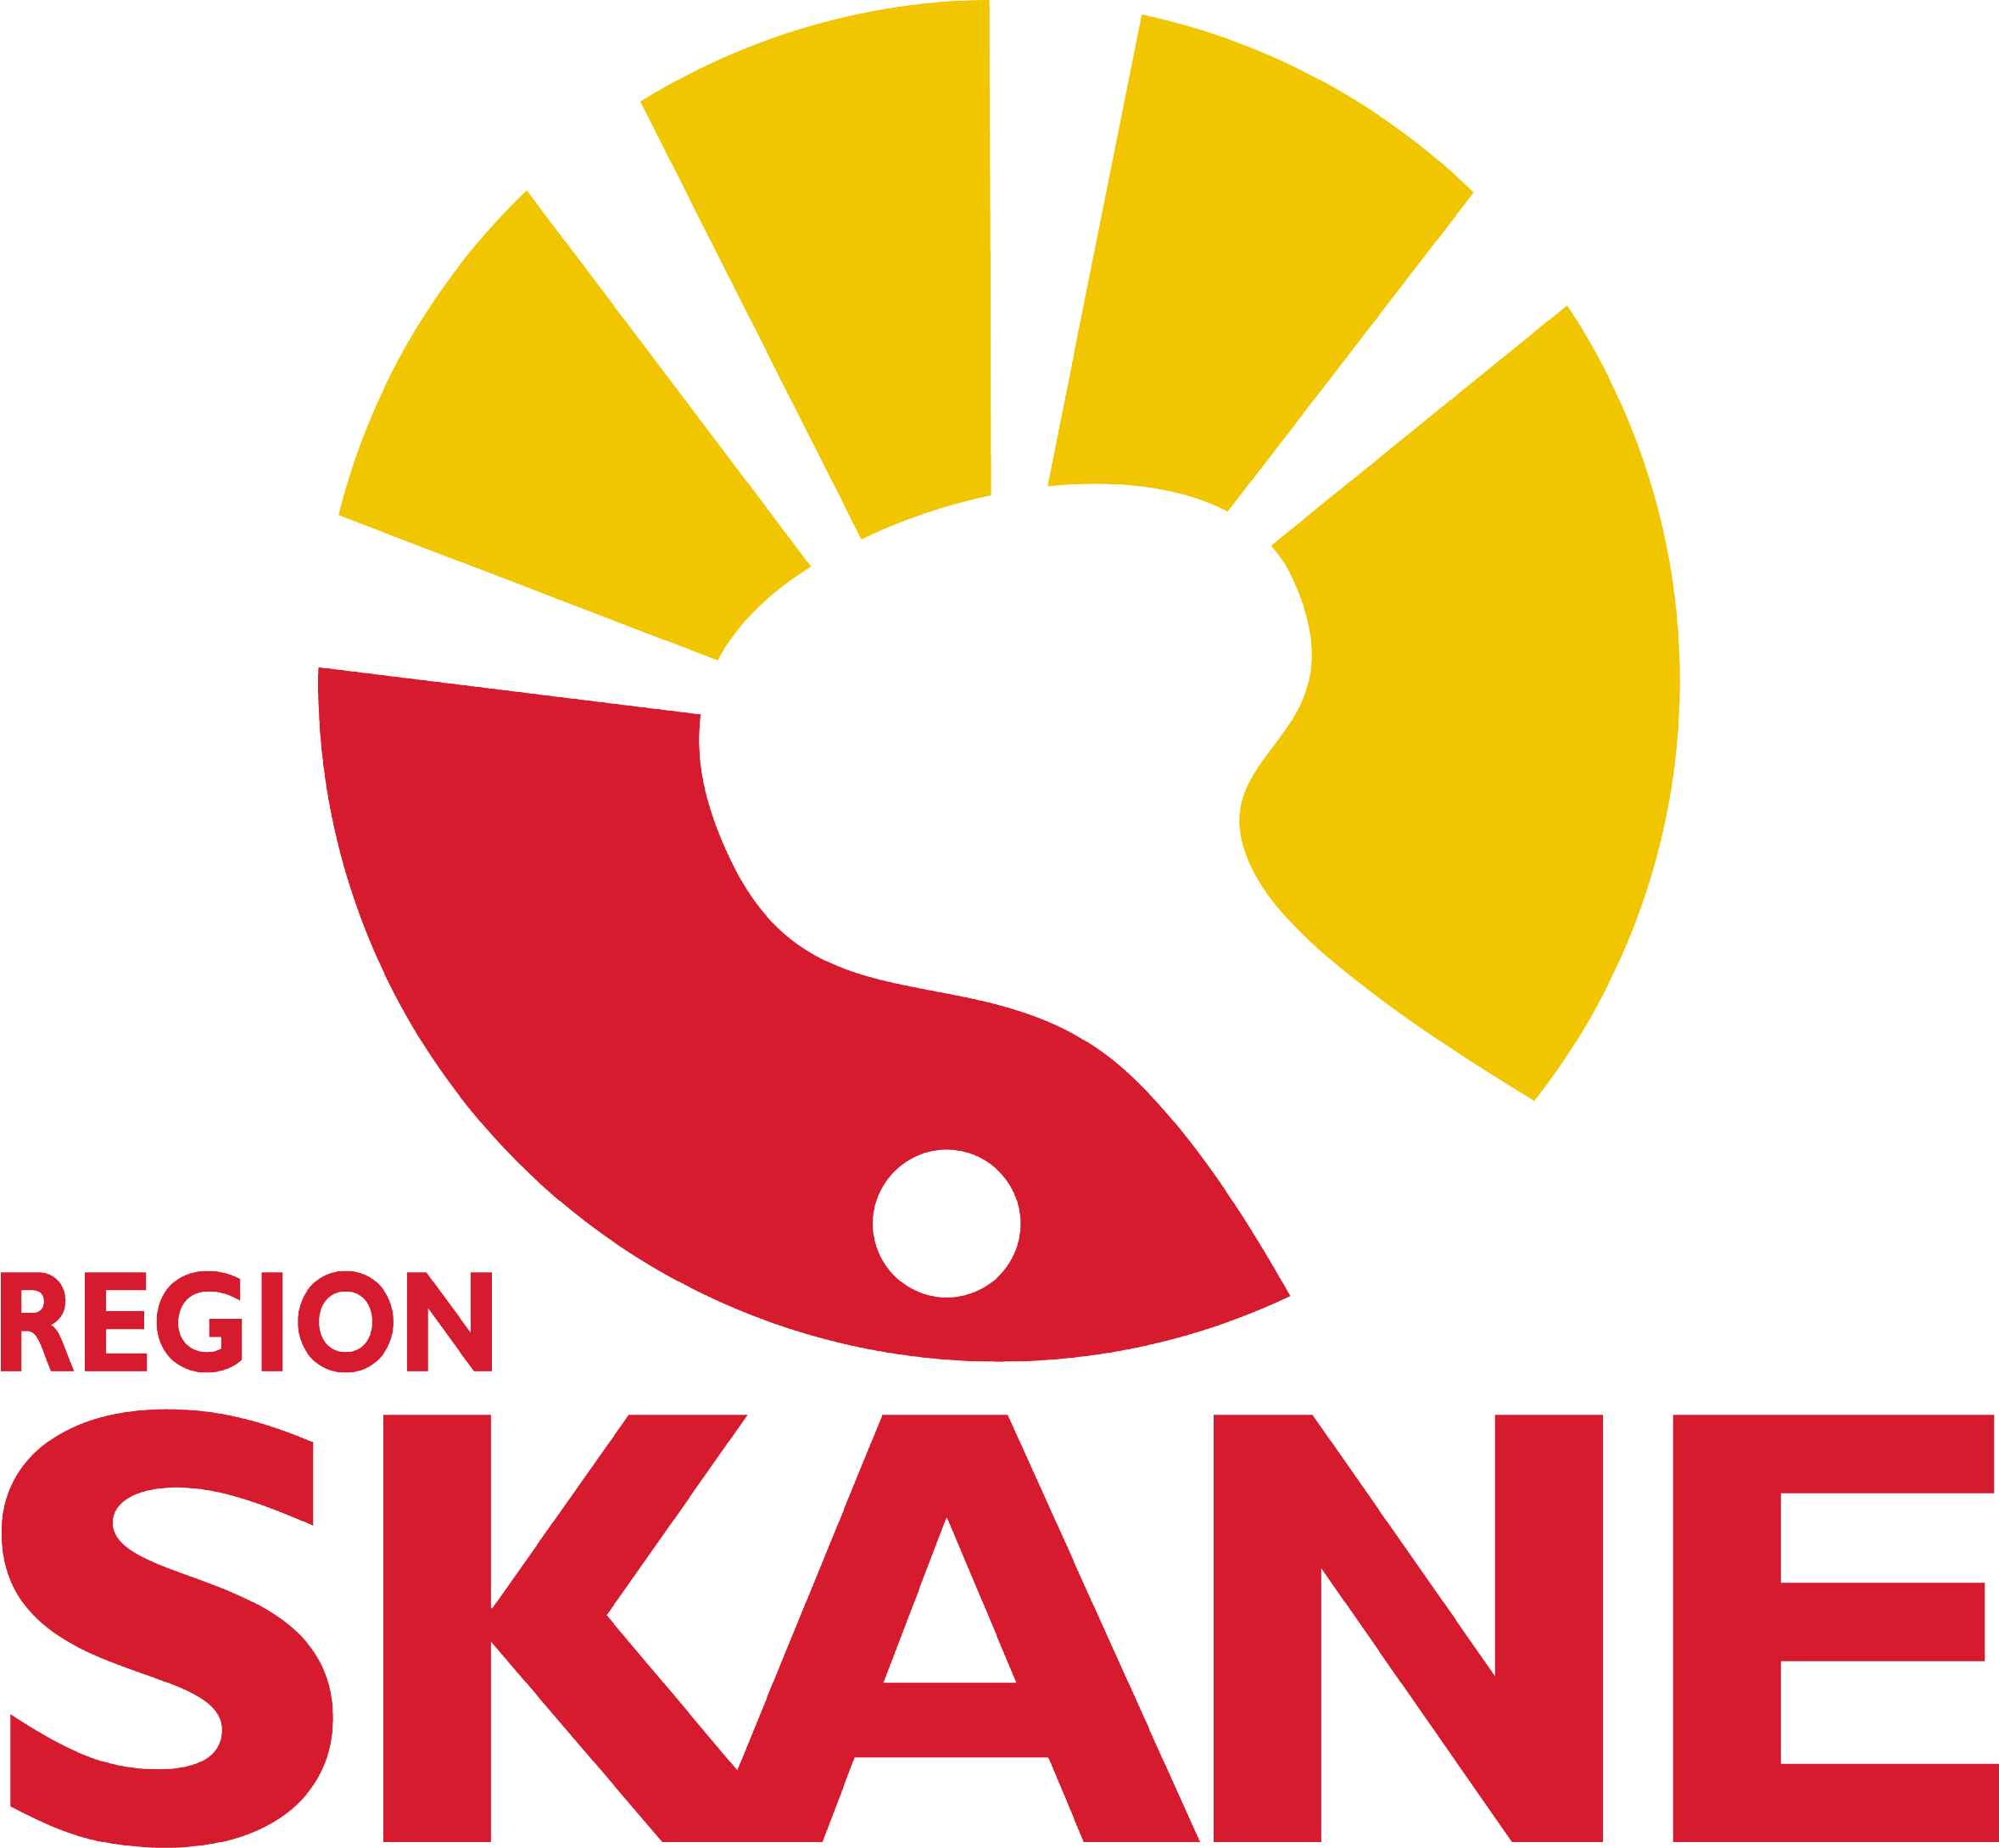 region-skane-logo.png